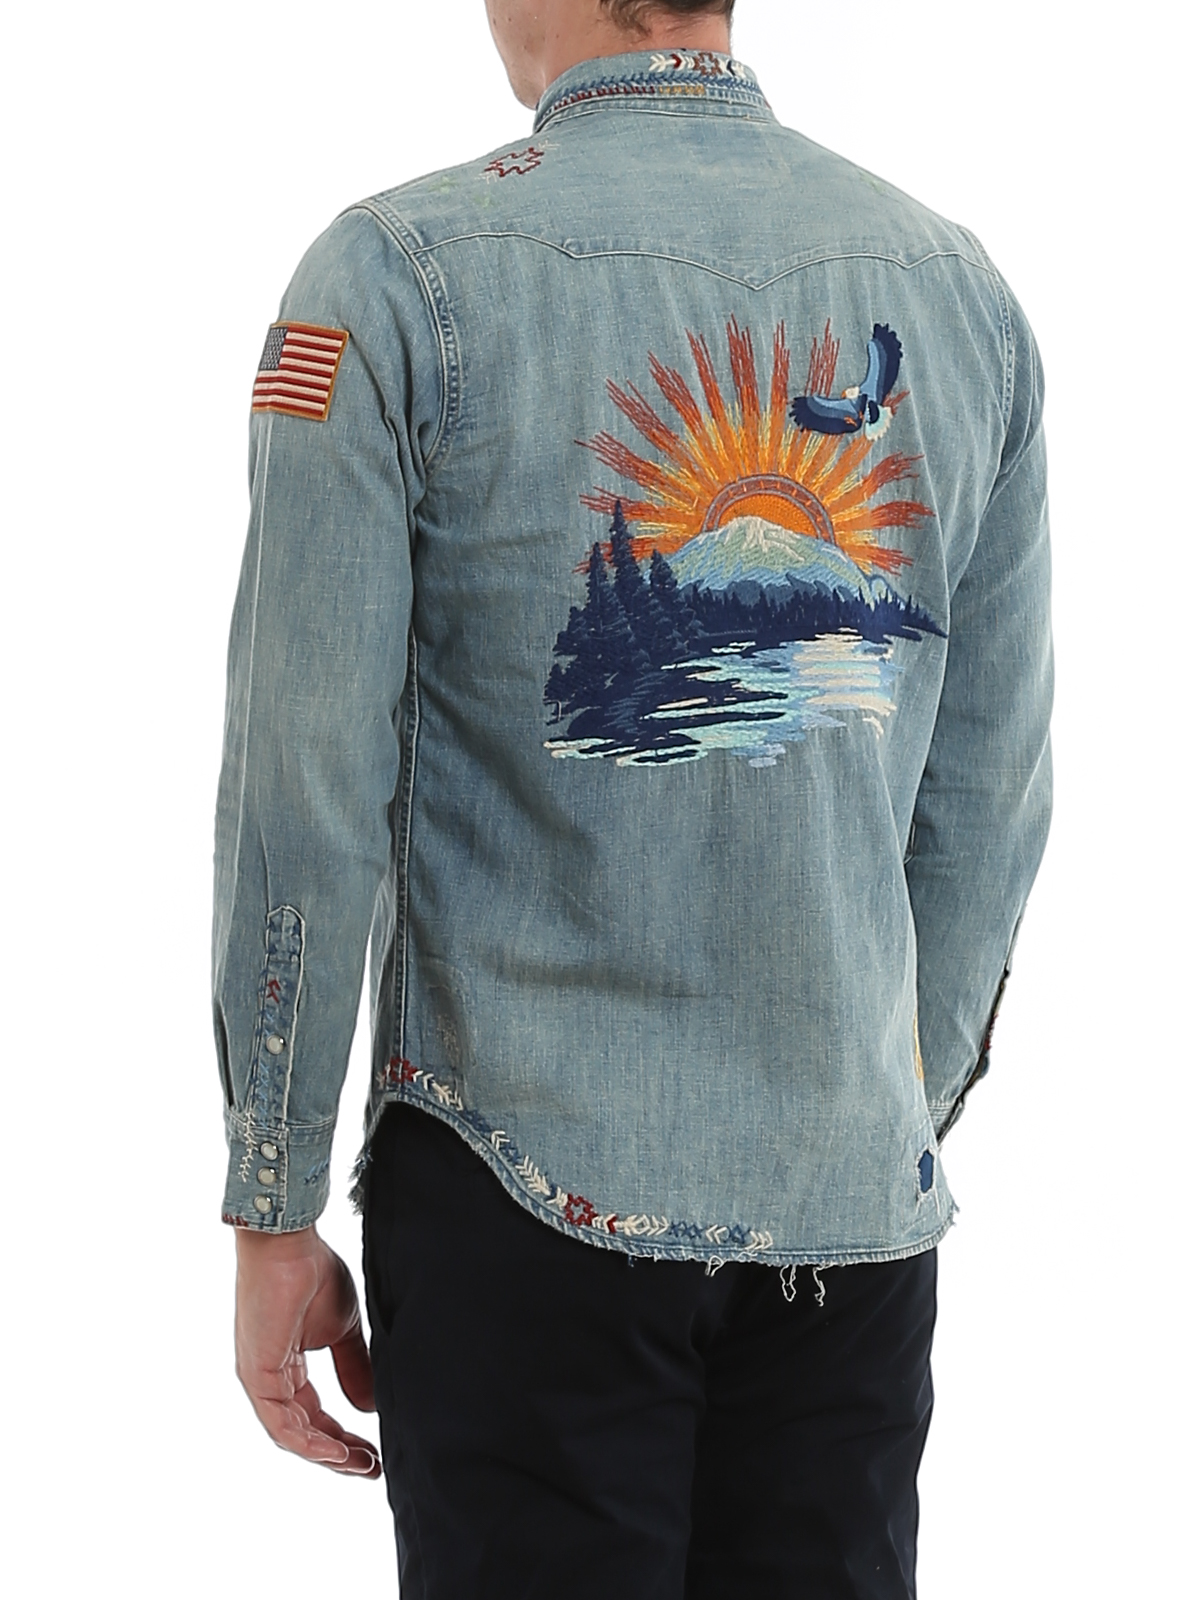 Whitney Benadrukken Schaduw Shirts Polo Ralph Lauren - Western embroidery denim shirt - 710786275001